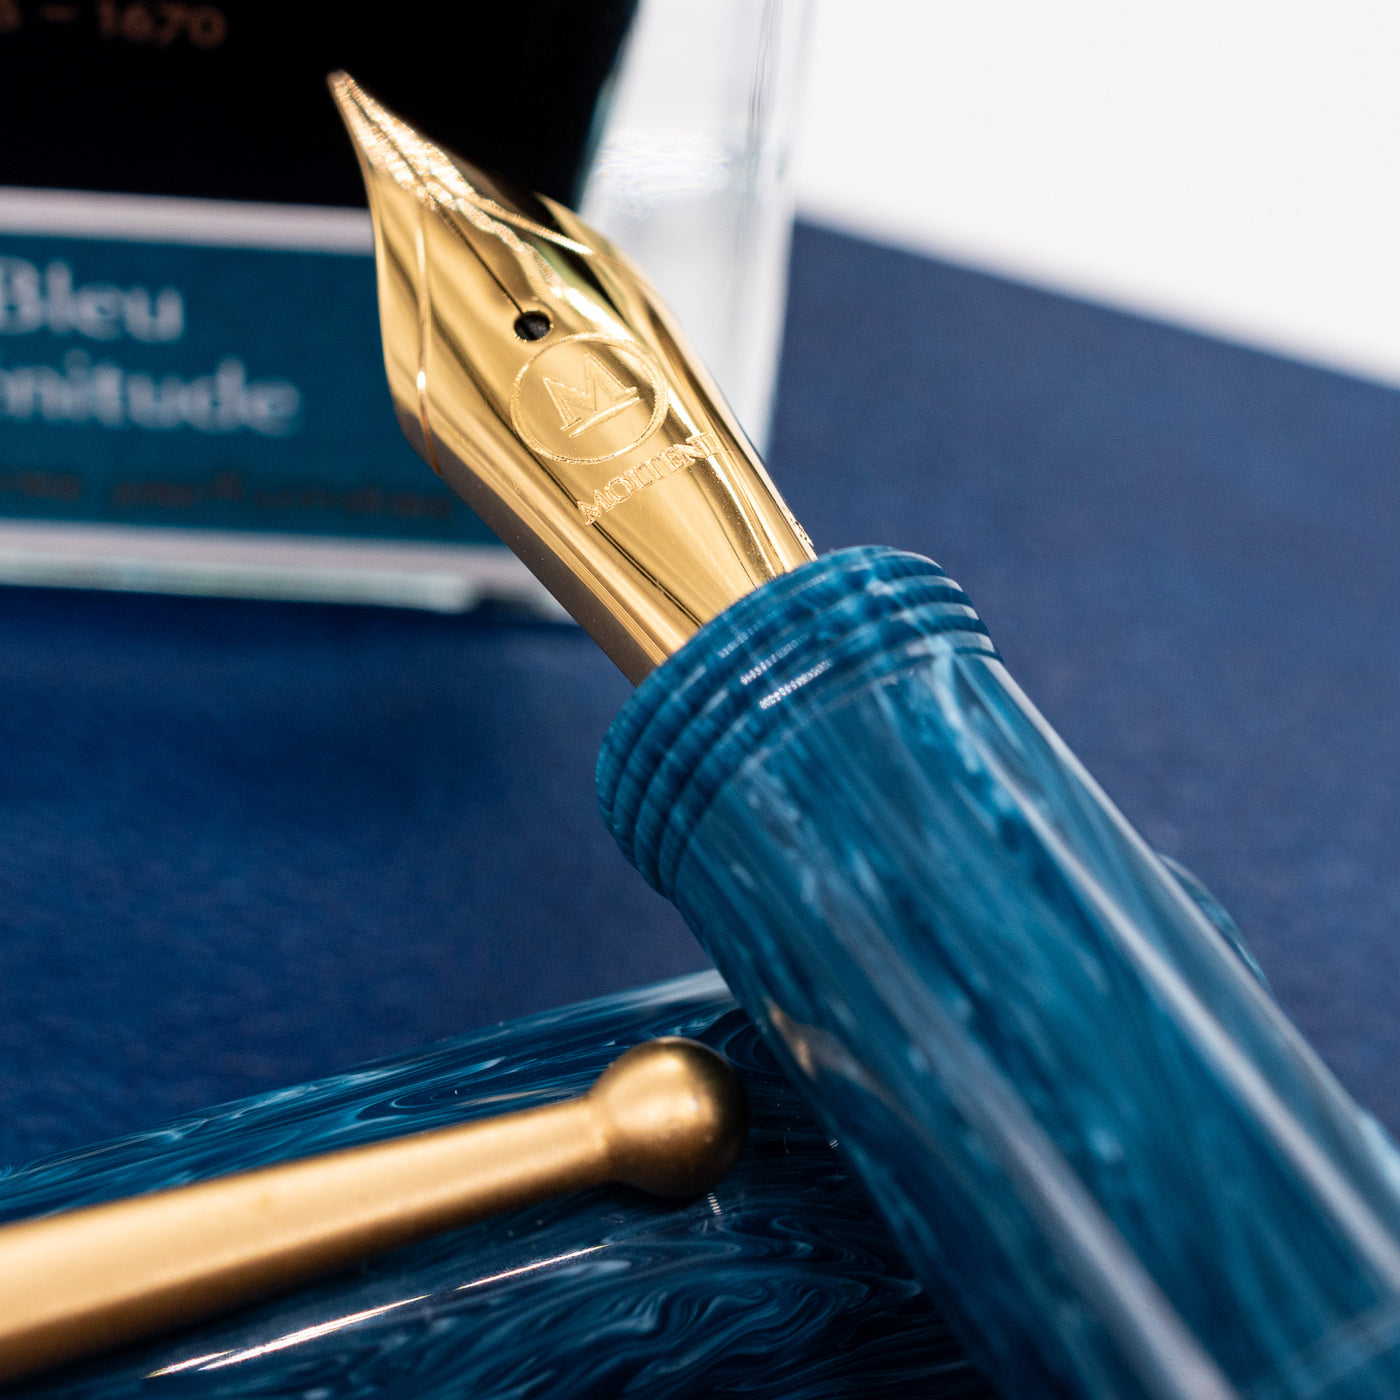 Molteni Modelo 88 Fountain Pen - Capri Blue stainless steel nib